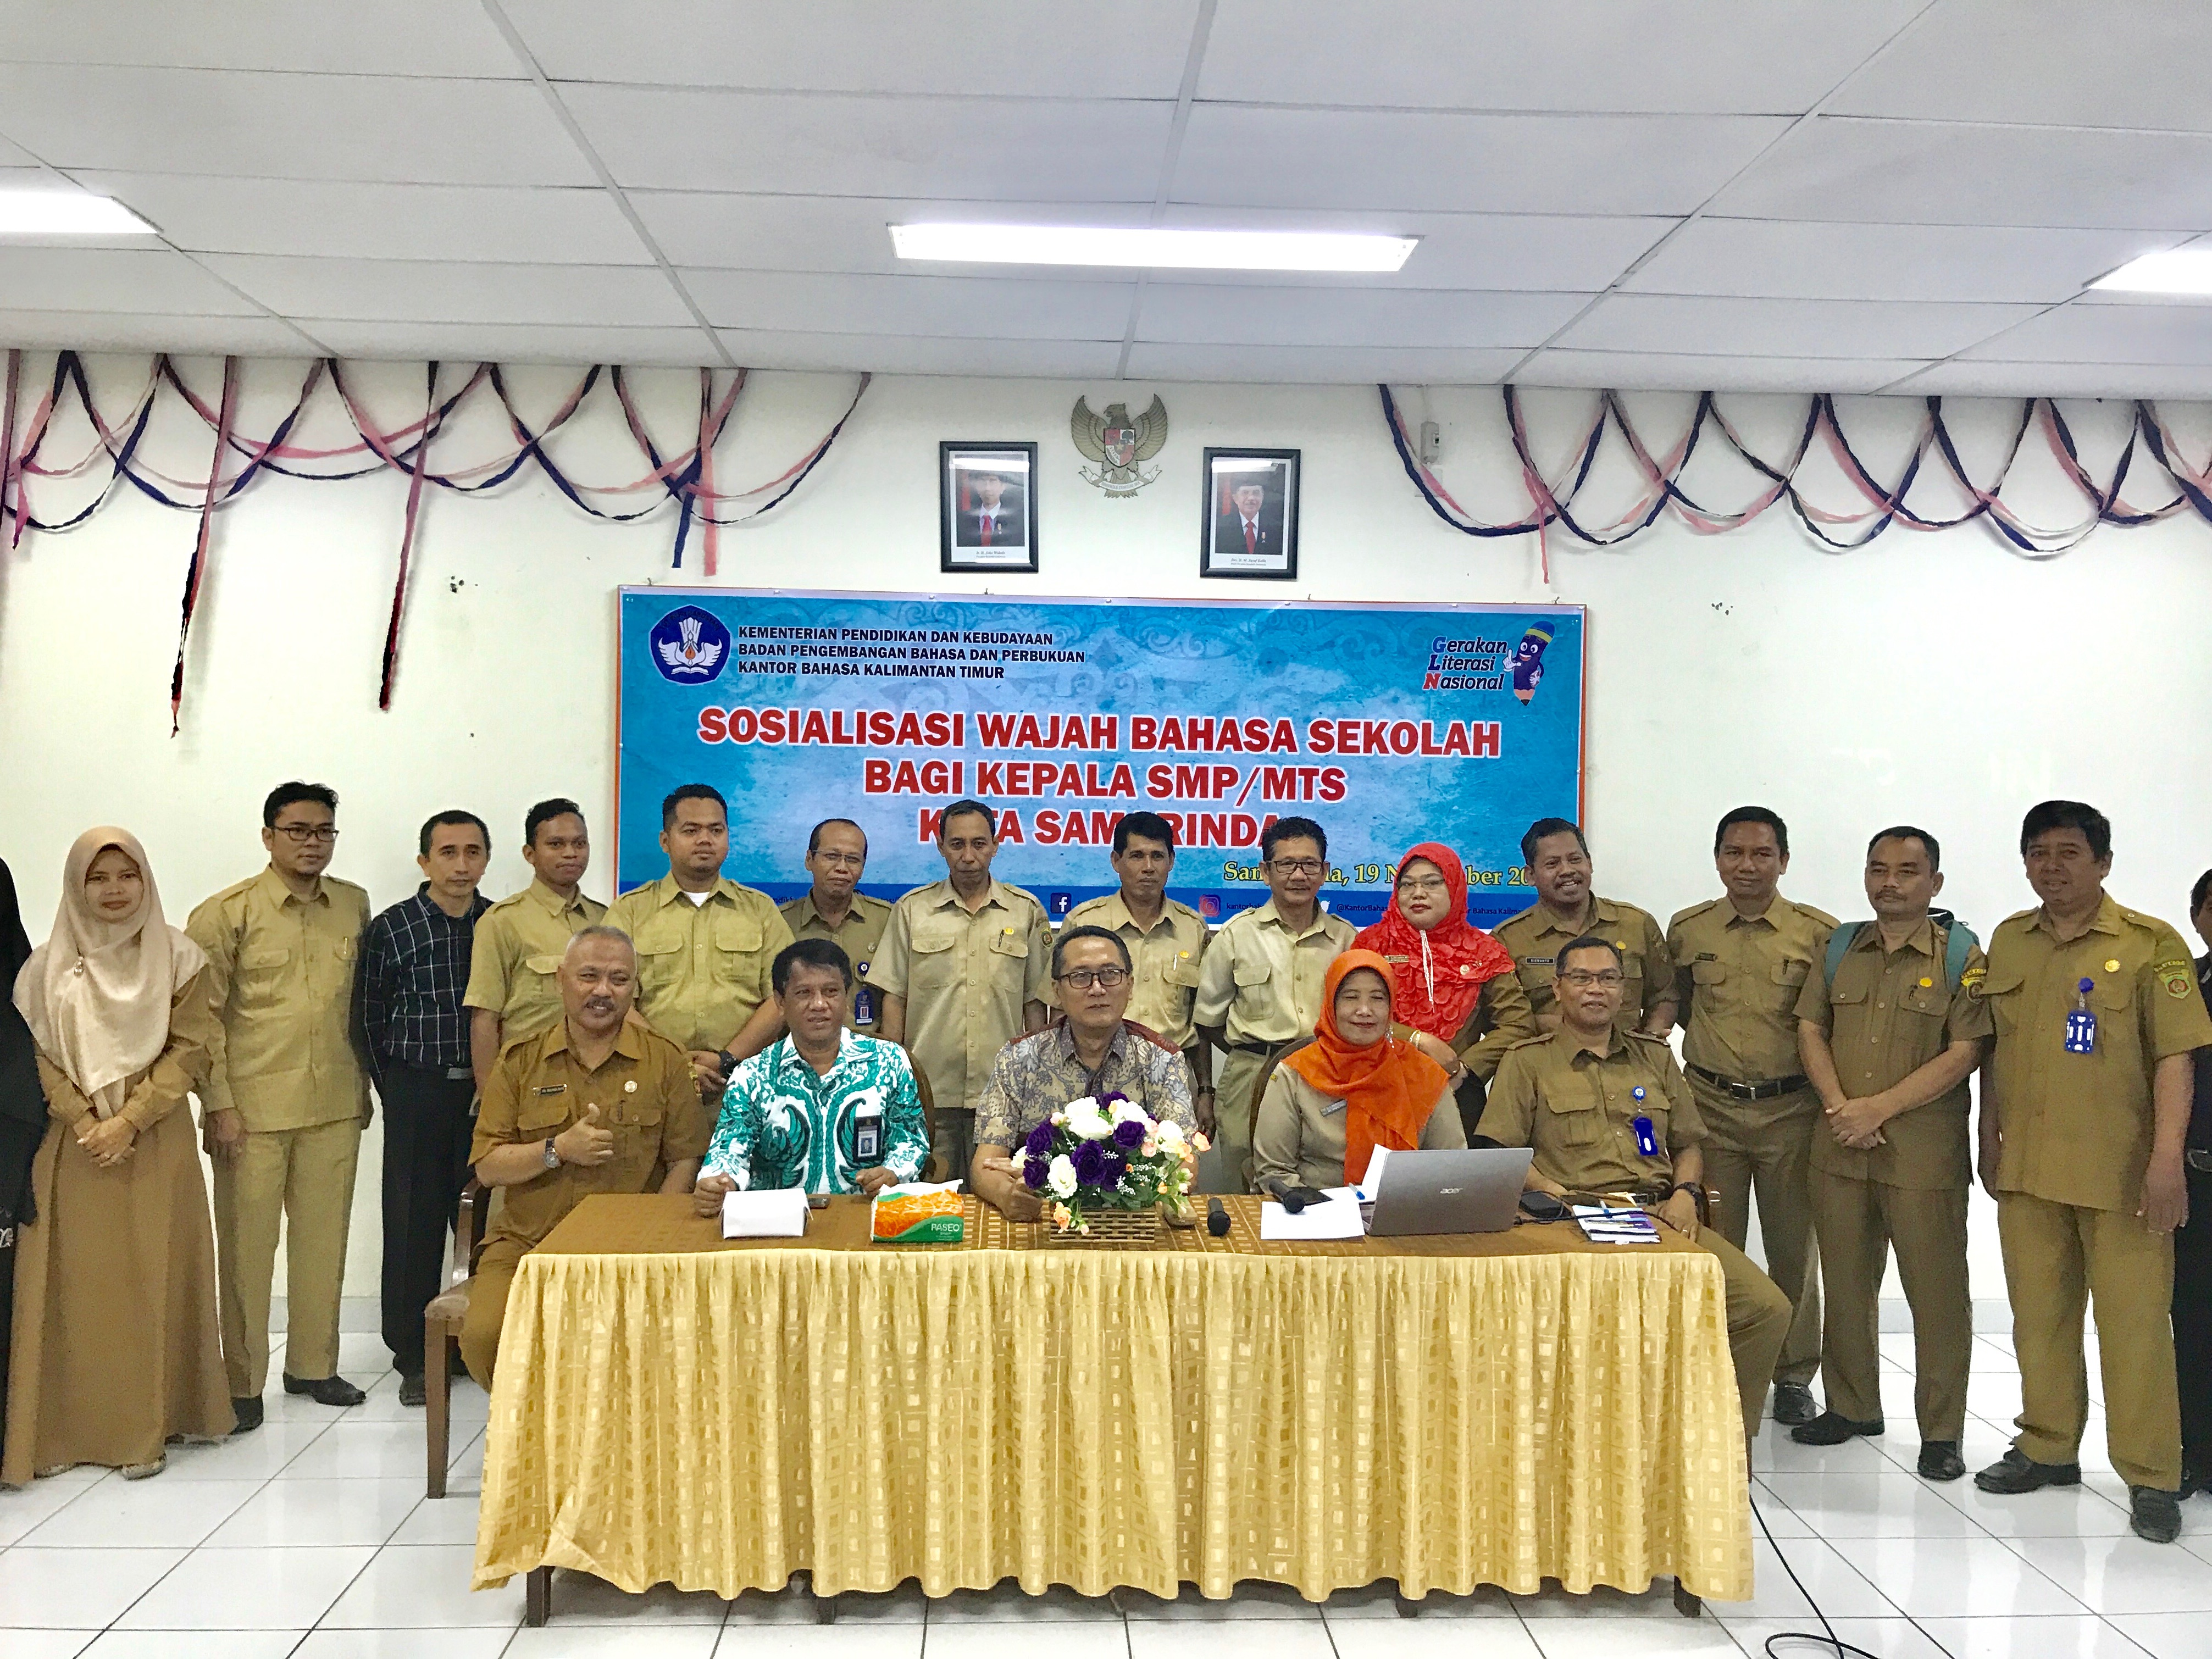 Kantor Bahasa Kalimantan Timur Ajak Kepala SMP/MTs. Utamakan Bahasa Negara di Ruang Publik